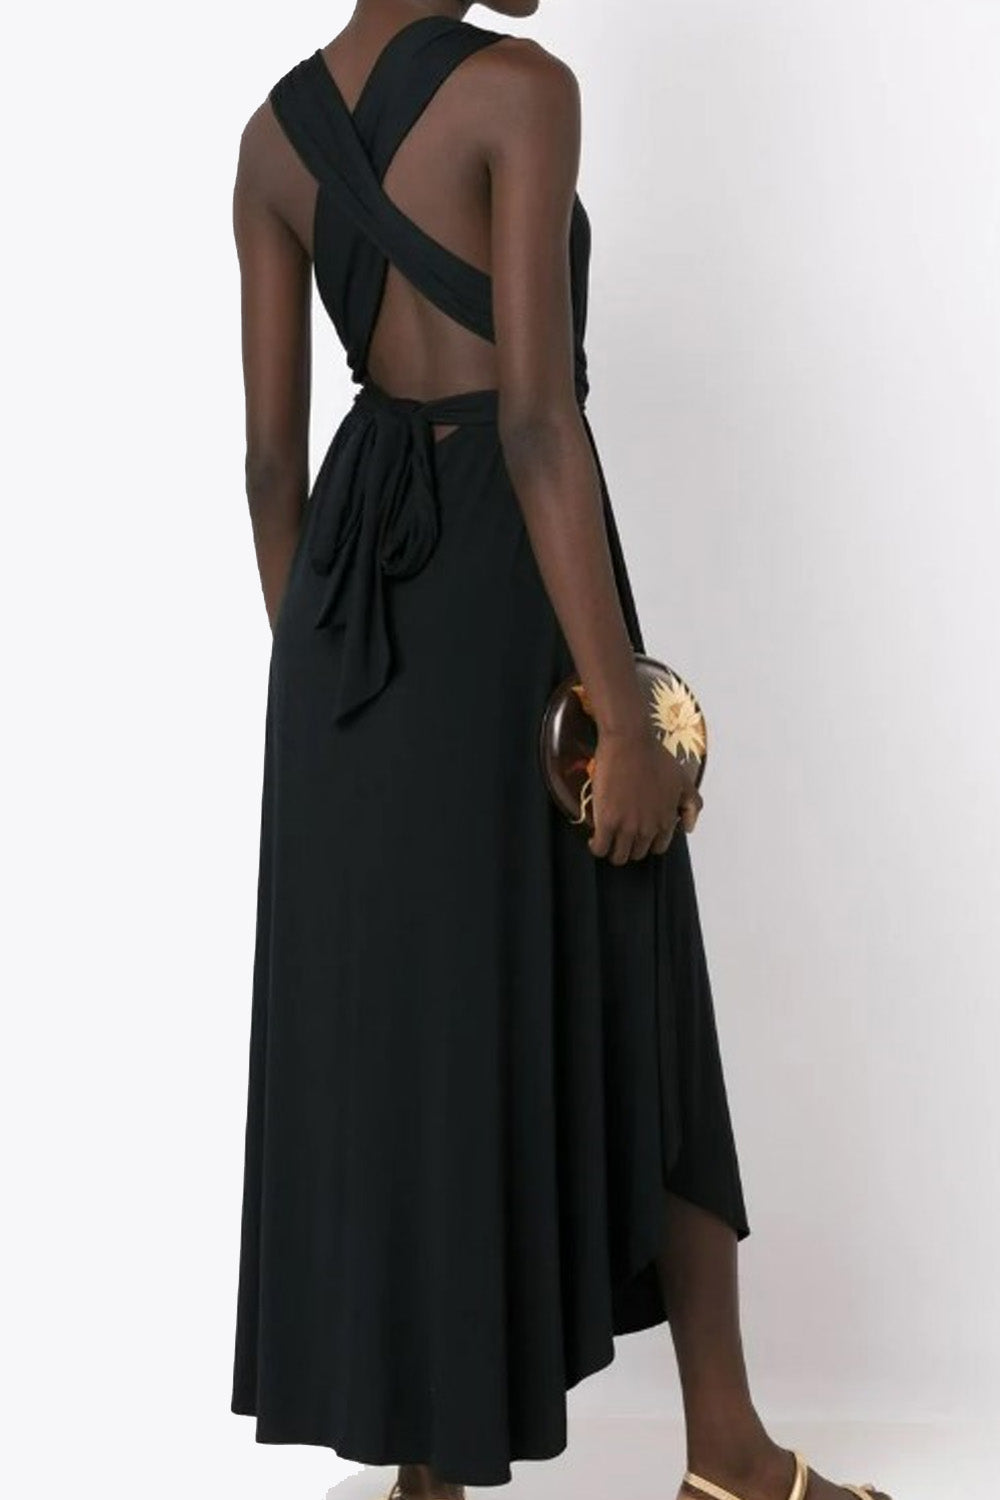 Celesta Black Dress